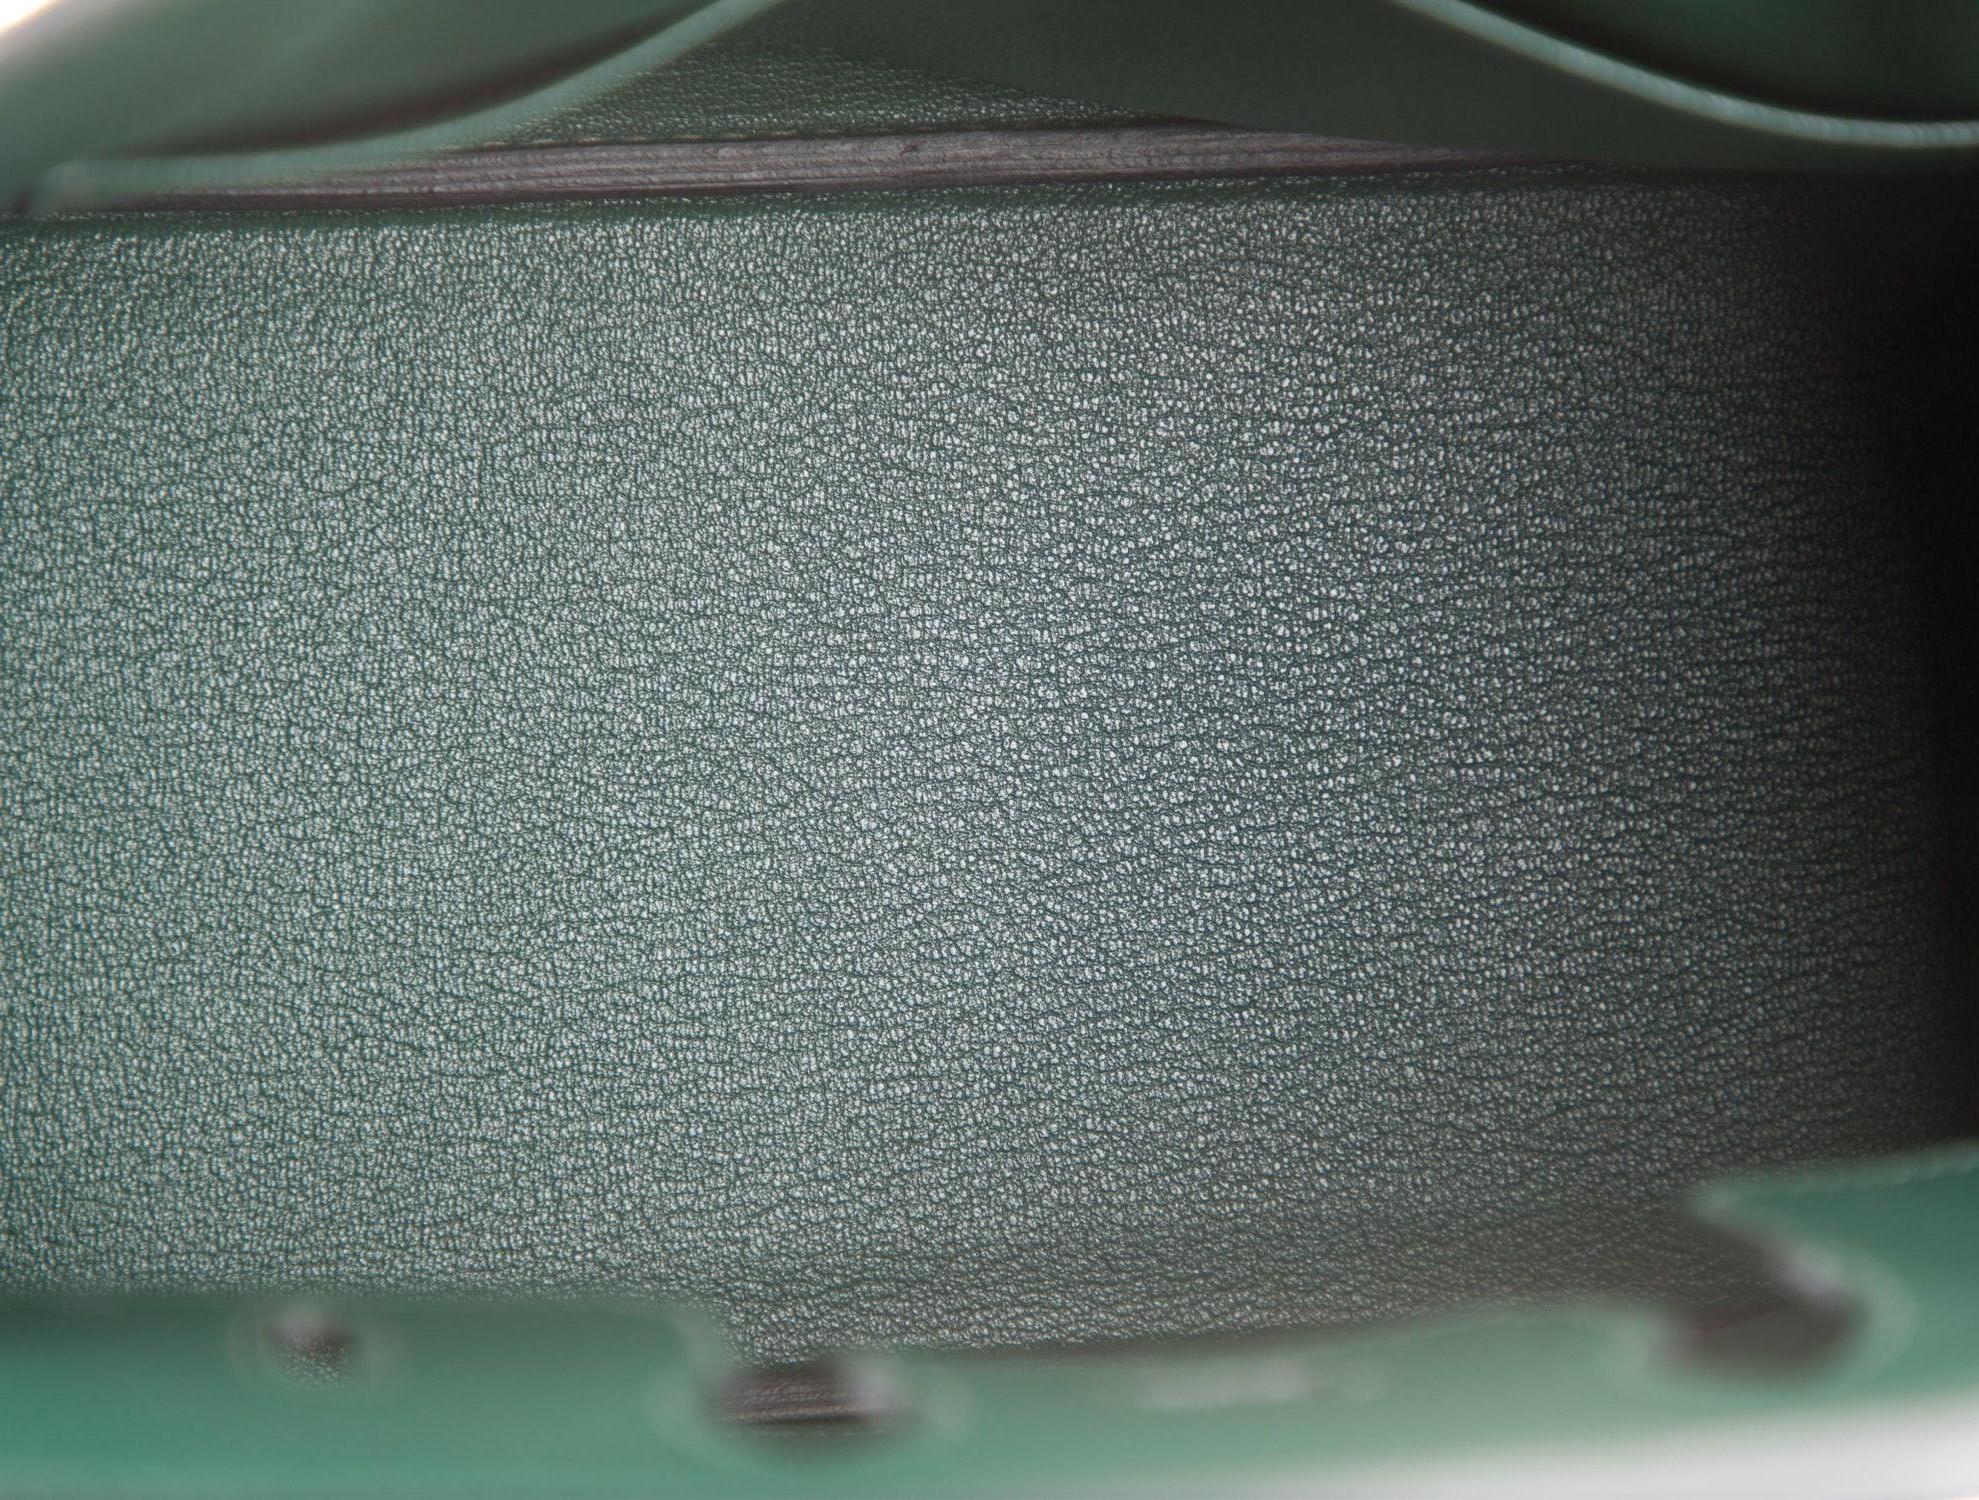 Hermes NEW Birkin 25 Green Leather Top Handle Tote Satchel Shoulder Bag in Box 1